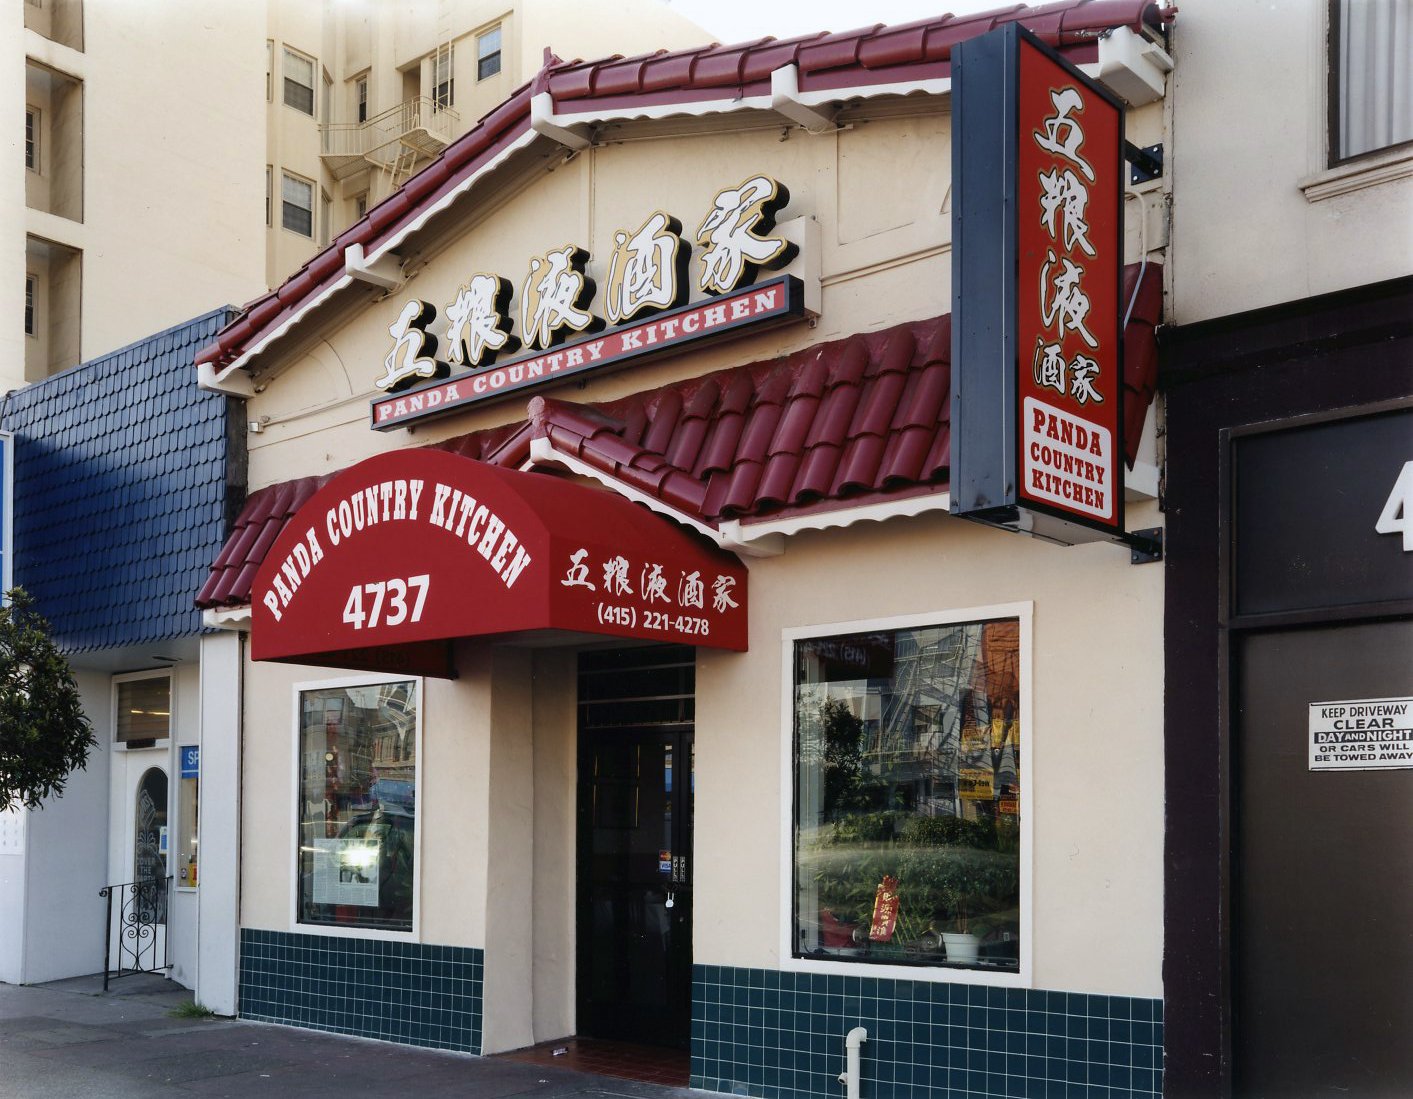  Panda Country Inn (formely Peg's Place), San Francisco, California, 2007 